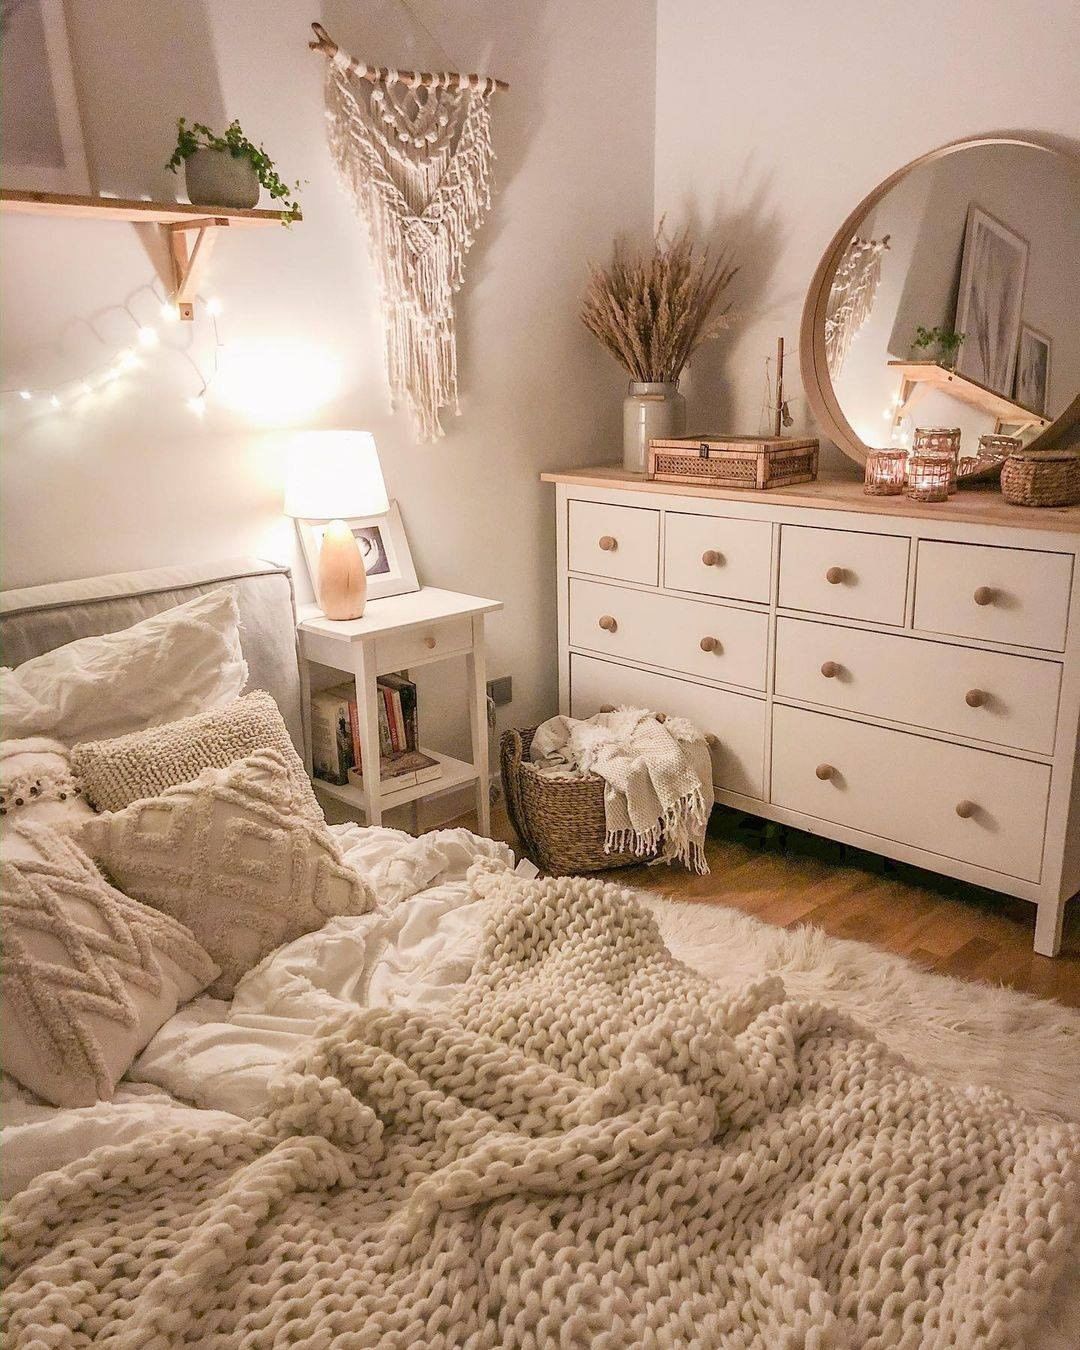 Stupendous ideas for girl’s bedroom